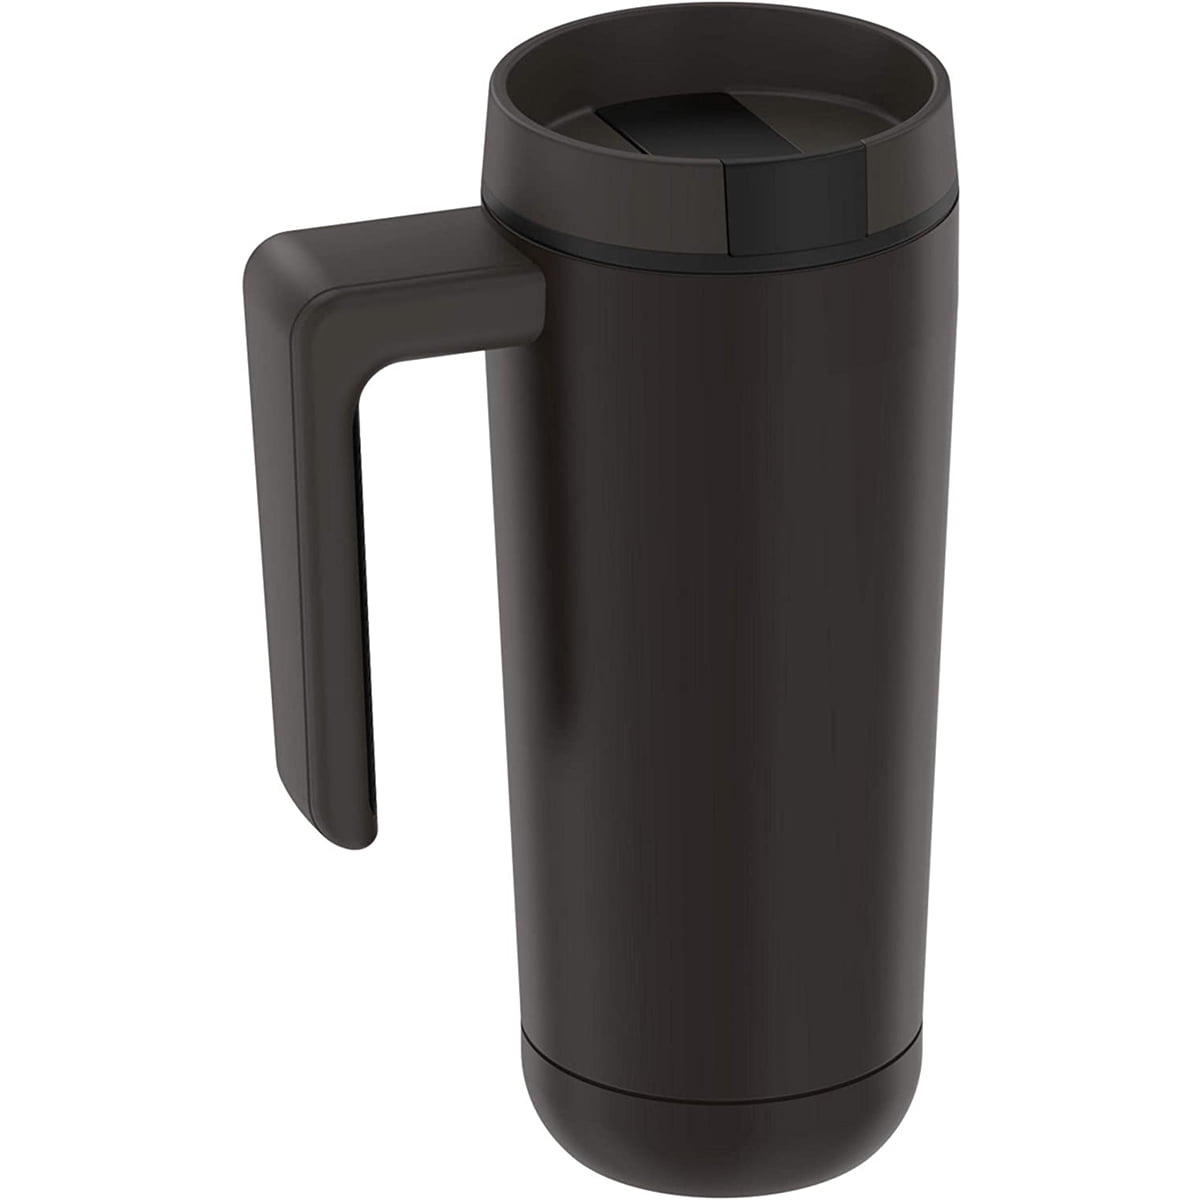 Thermos 18 oz. Alta Stainless Steel Mug - Espresso Black 